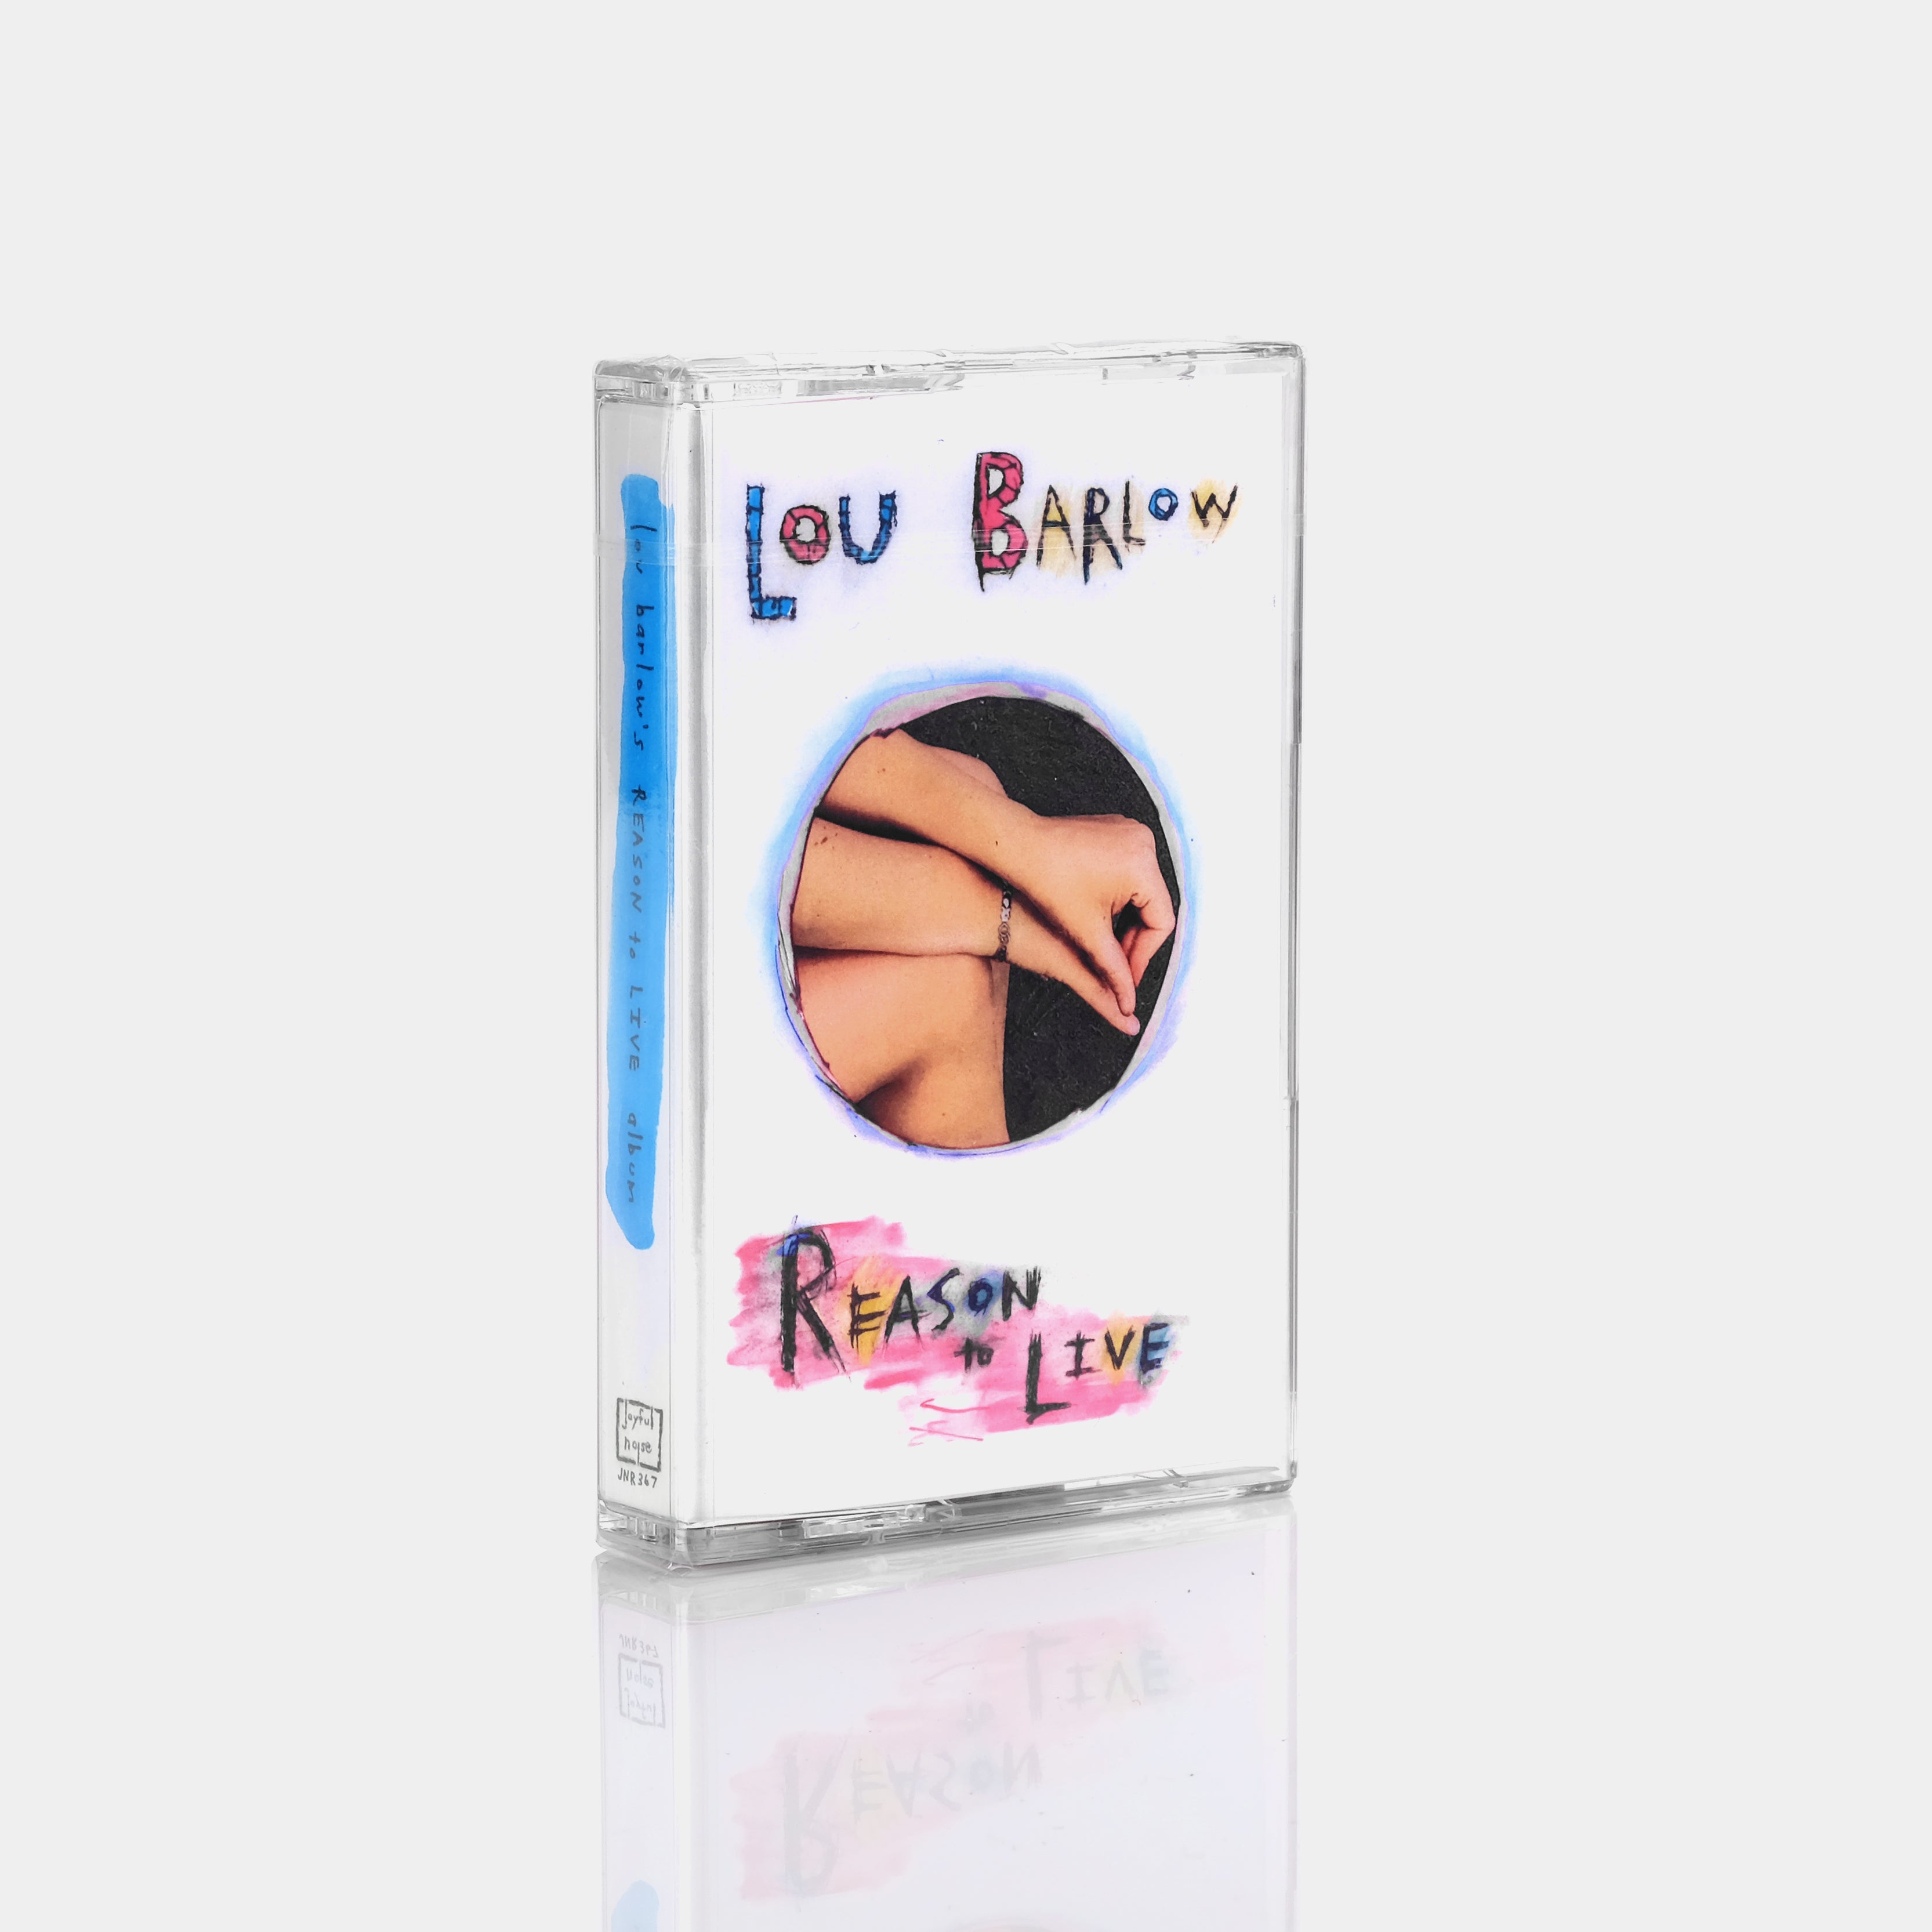 Lou Barlow - Reason To Live Cassette Tape